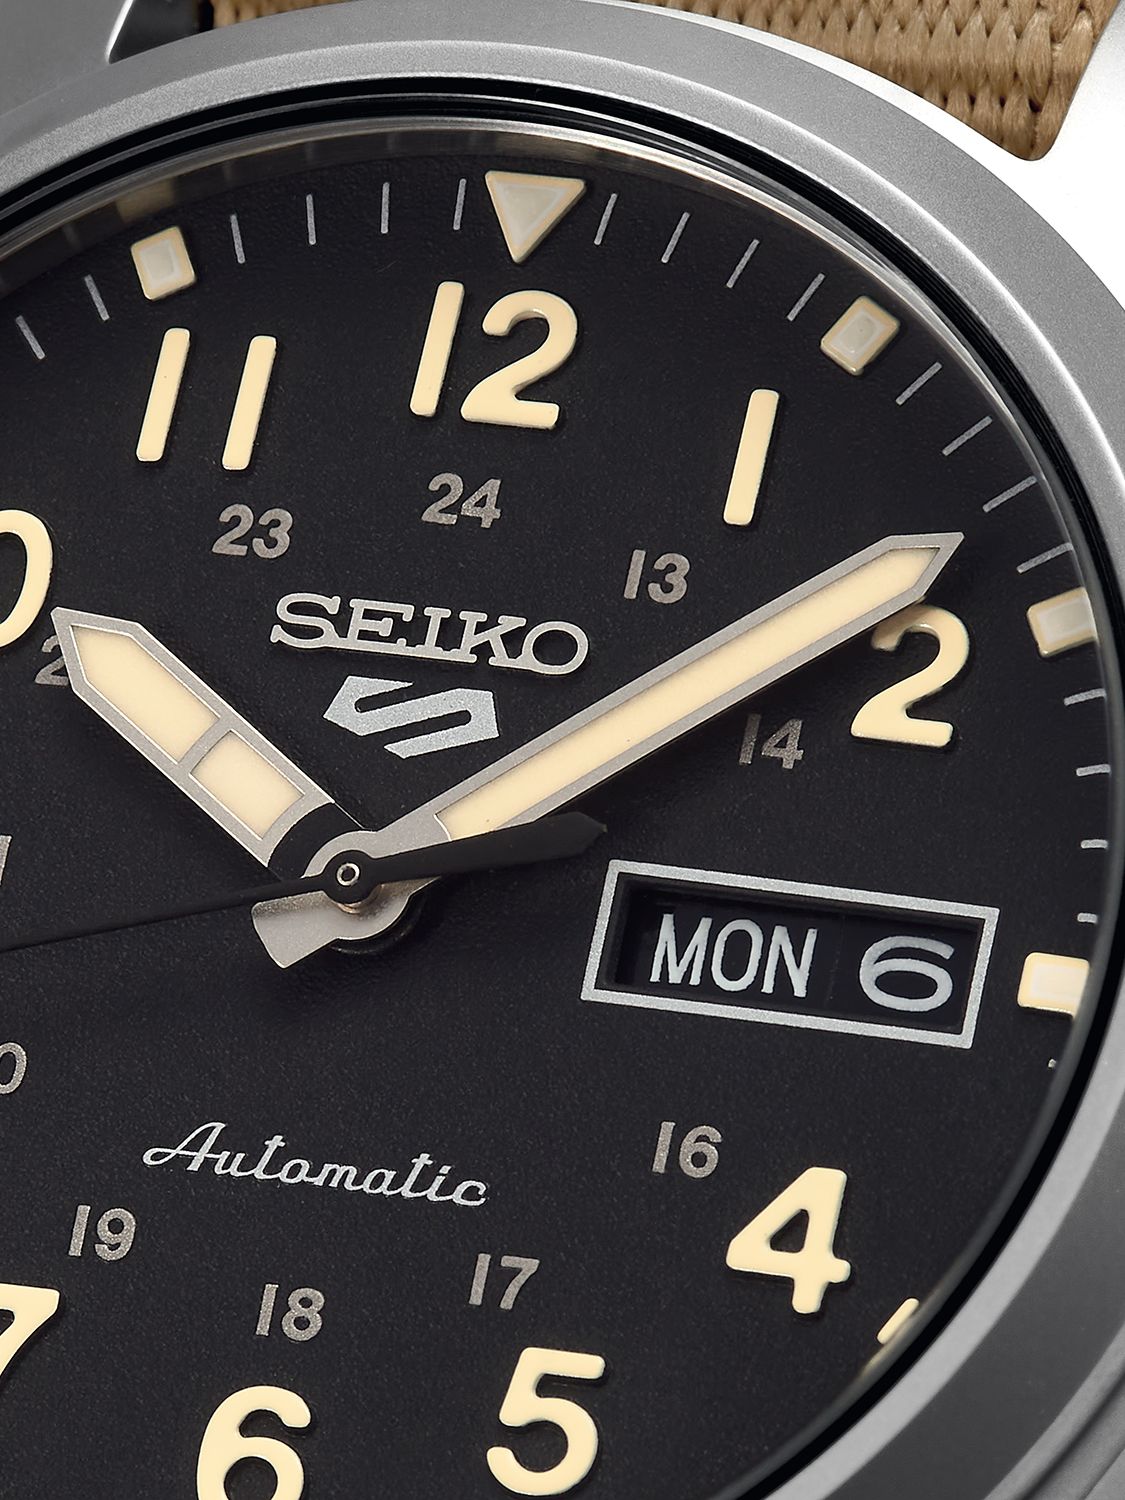 Seiko SRPG35K1 Men's 5 Sports Automatic Day Date Fabric Strap Watch, Khaki/Black